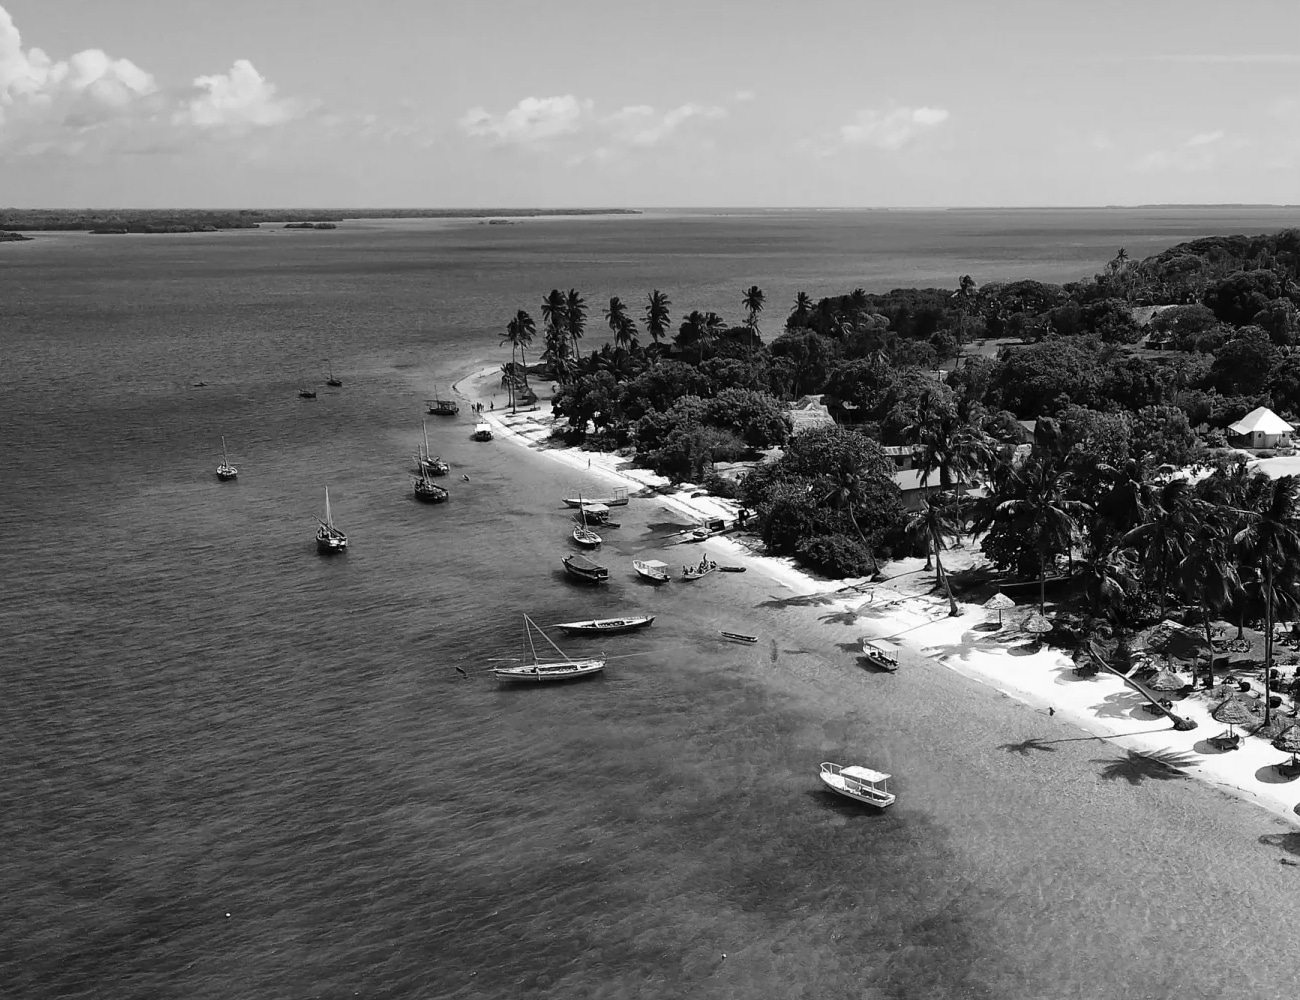 A View of Mafia Island in Tanzania